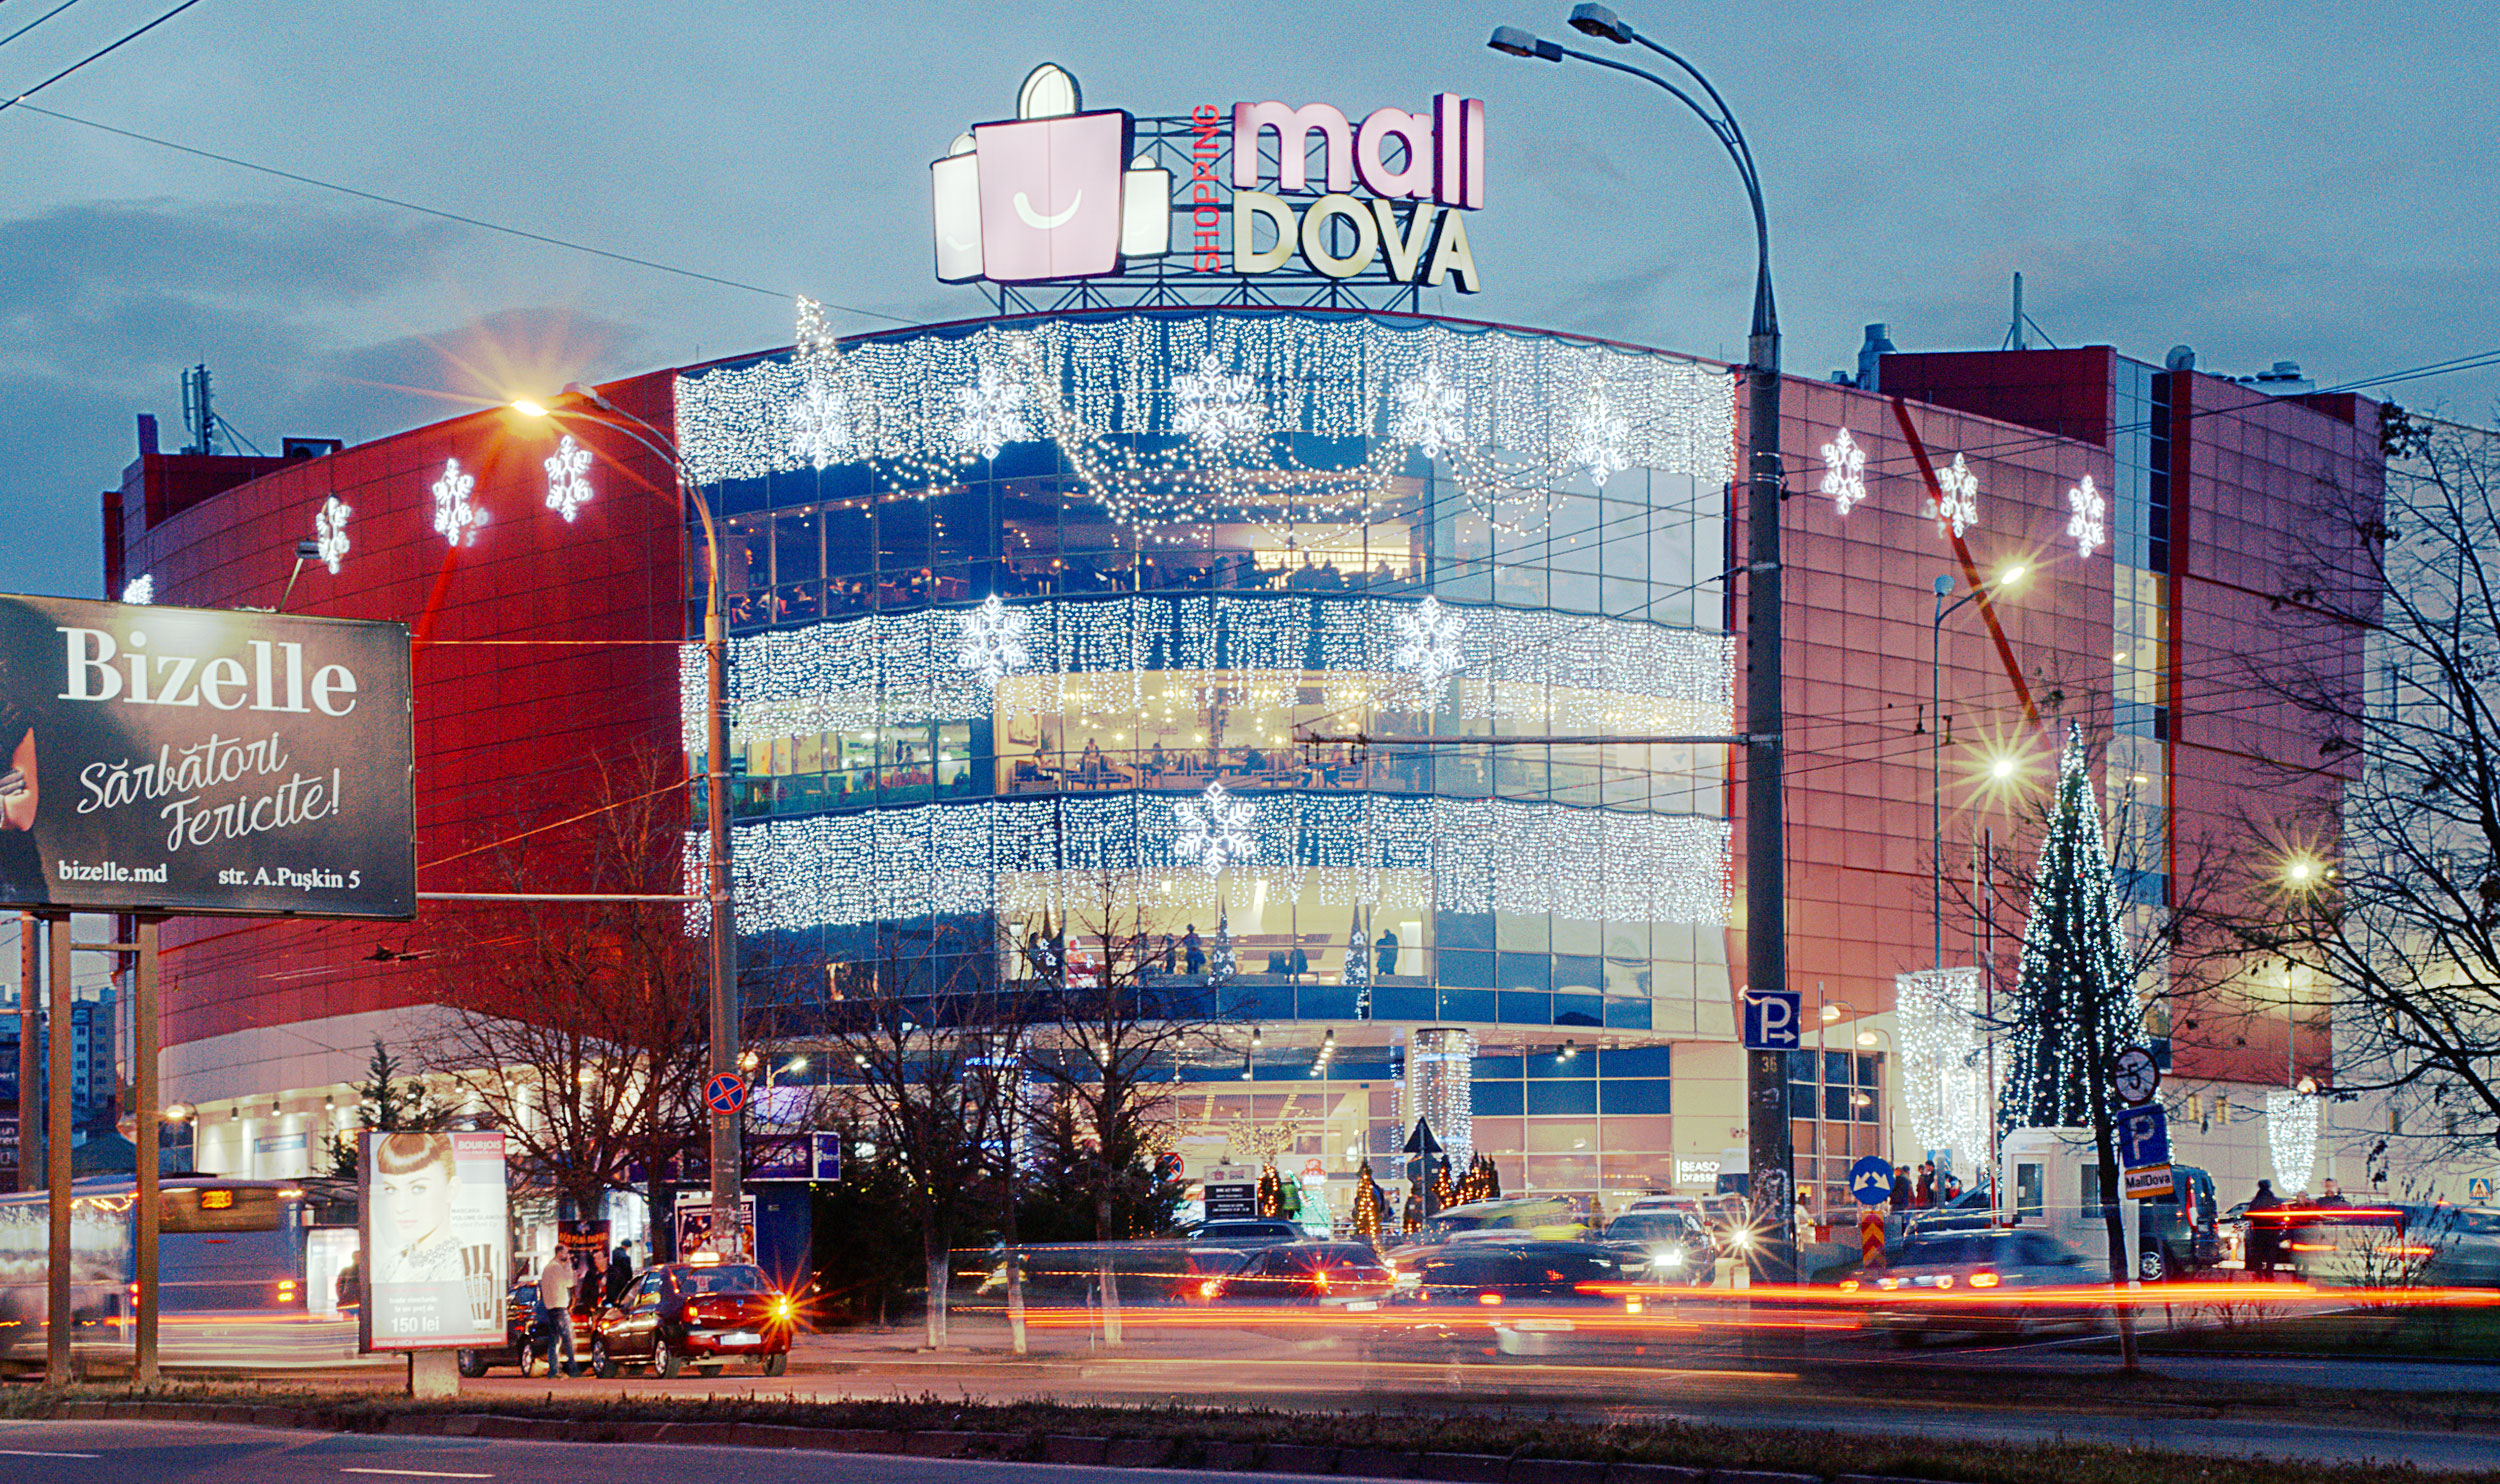 MallDova shopping center in Chisinau